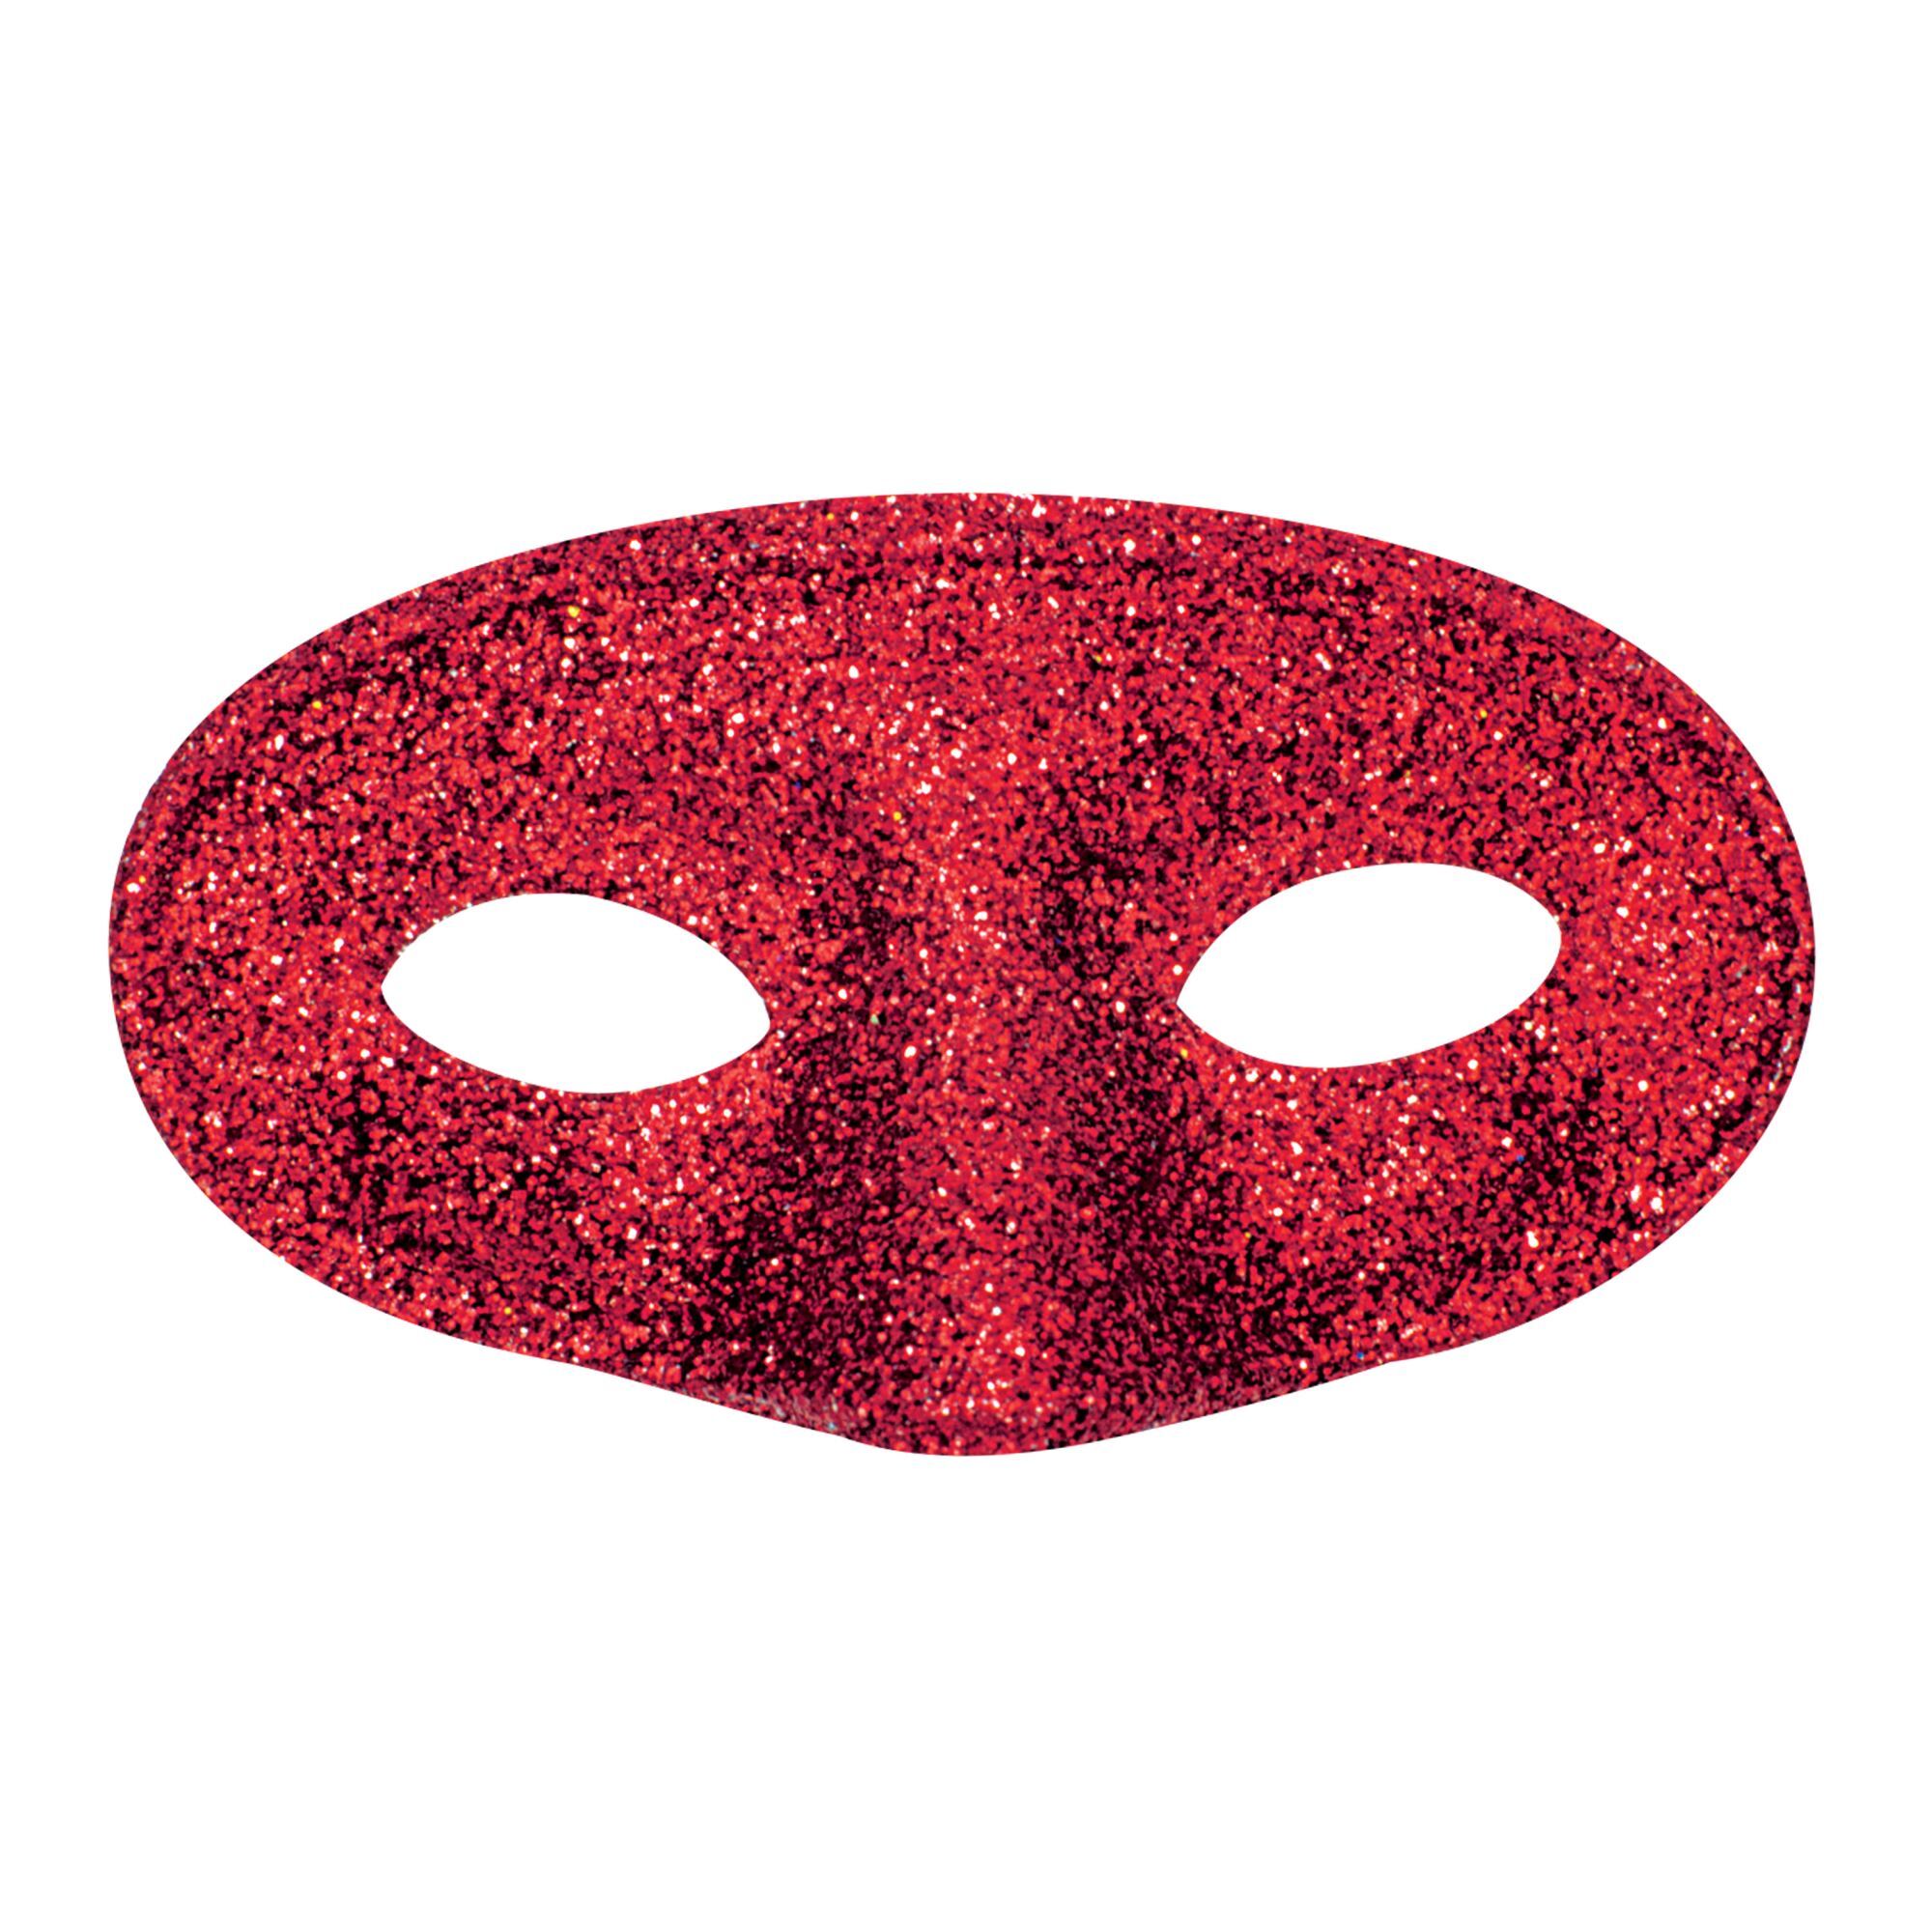 Glitter rood oogmasker voor een bling bling party